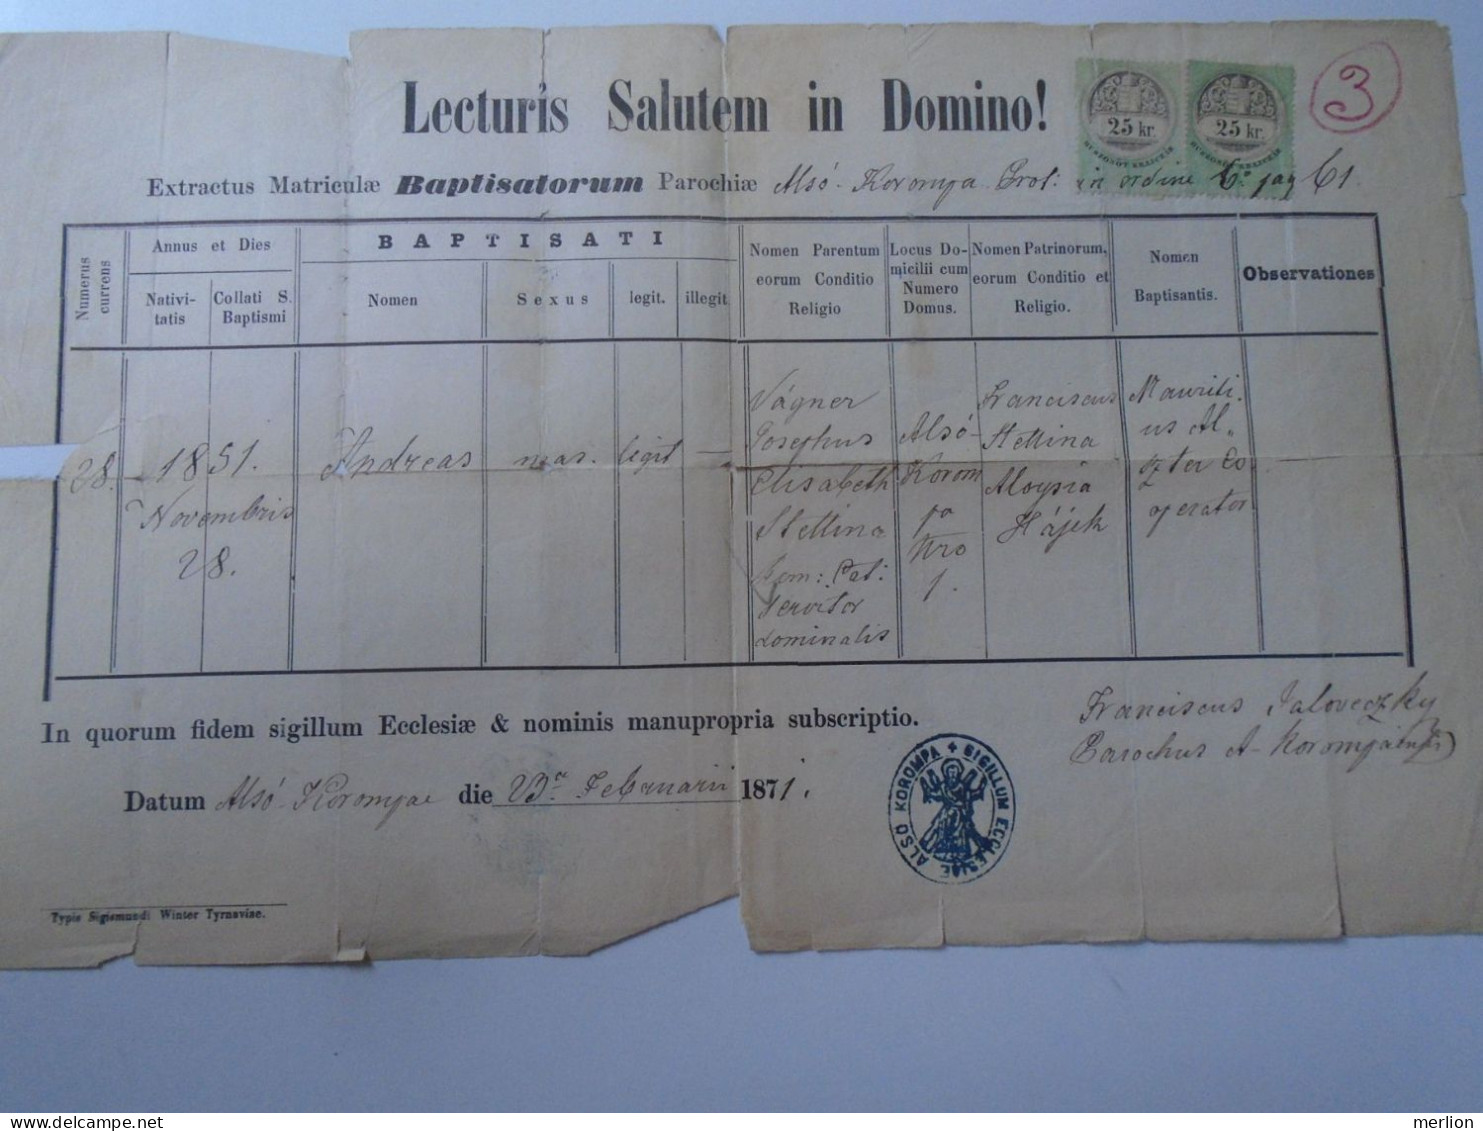 ZA466.14  Old Document  -Slovakia  Alsókorompa - Dolná Krupá - 1871  Andreas Wagner, Vágner, Stettina, Jaloveczky - Geburt & Taufe